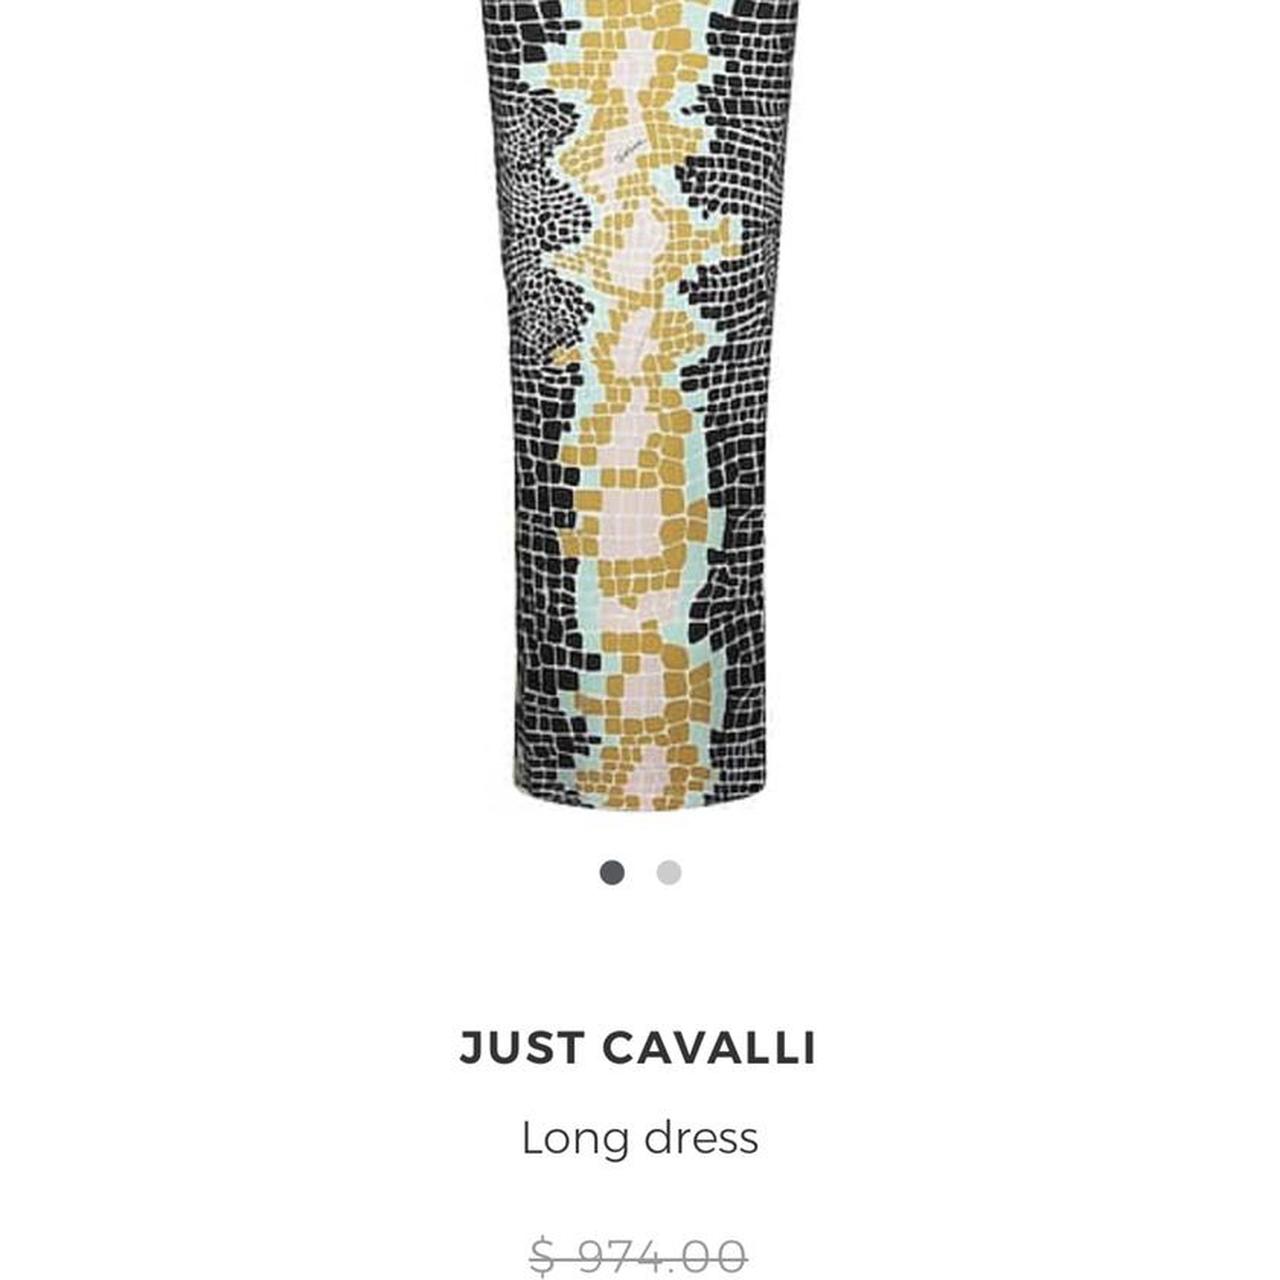 Product Image 2 - Cavili long dress
Price that I